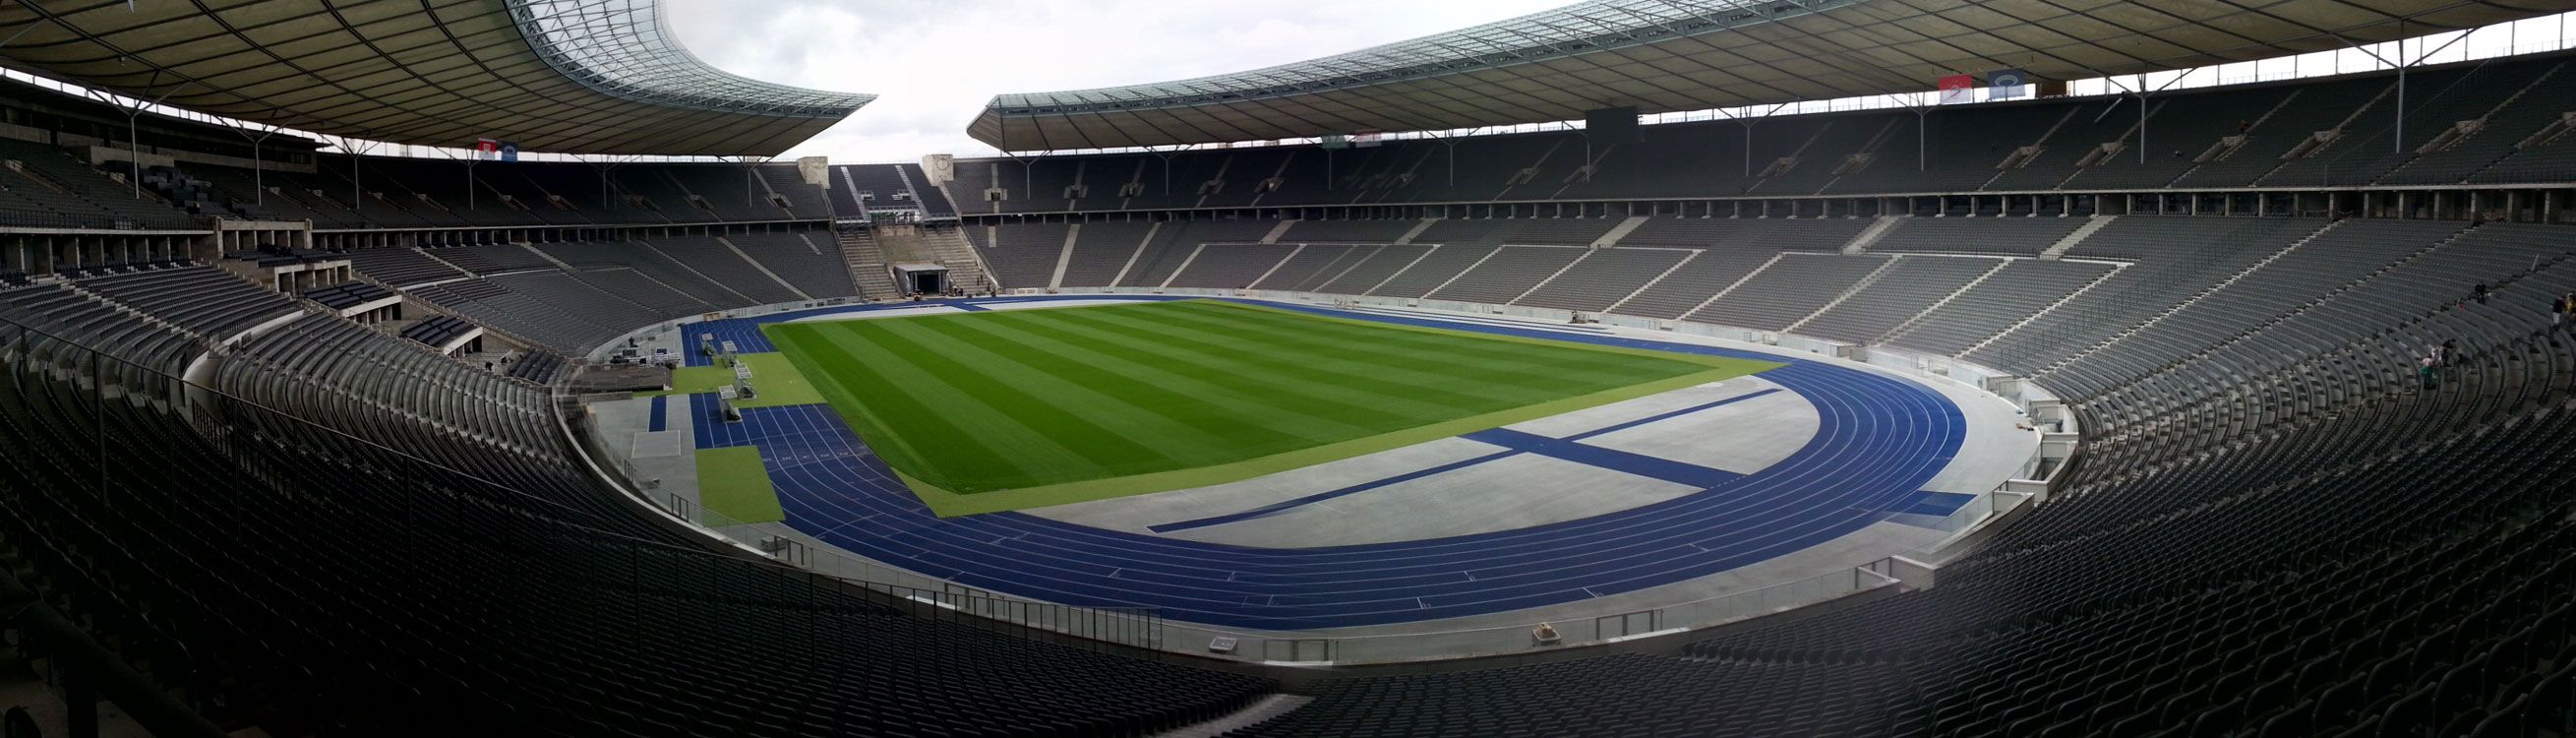 Stade Olympique, Berlin, Allemagne